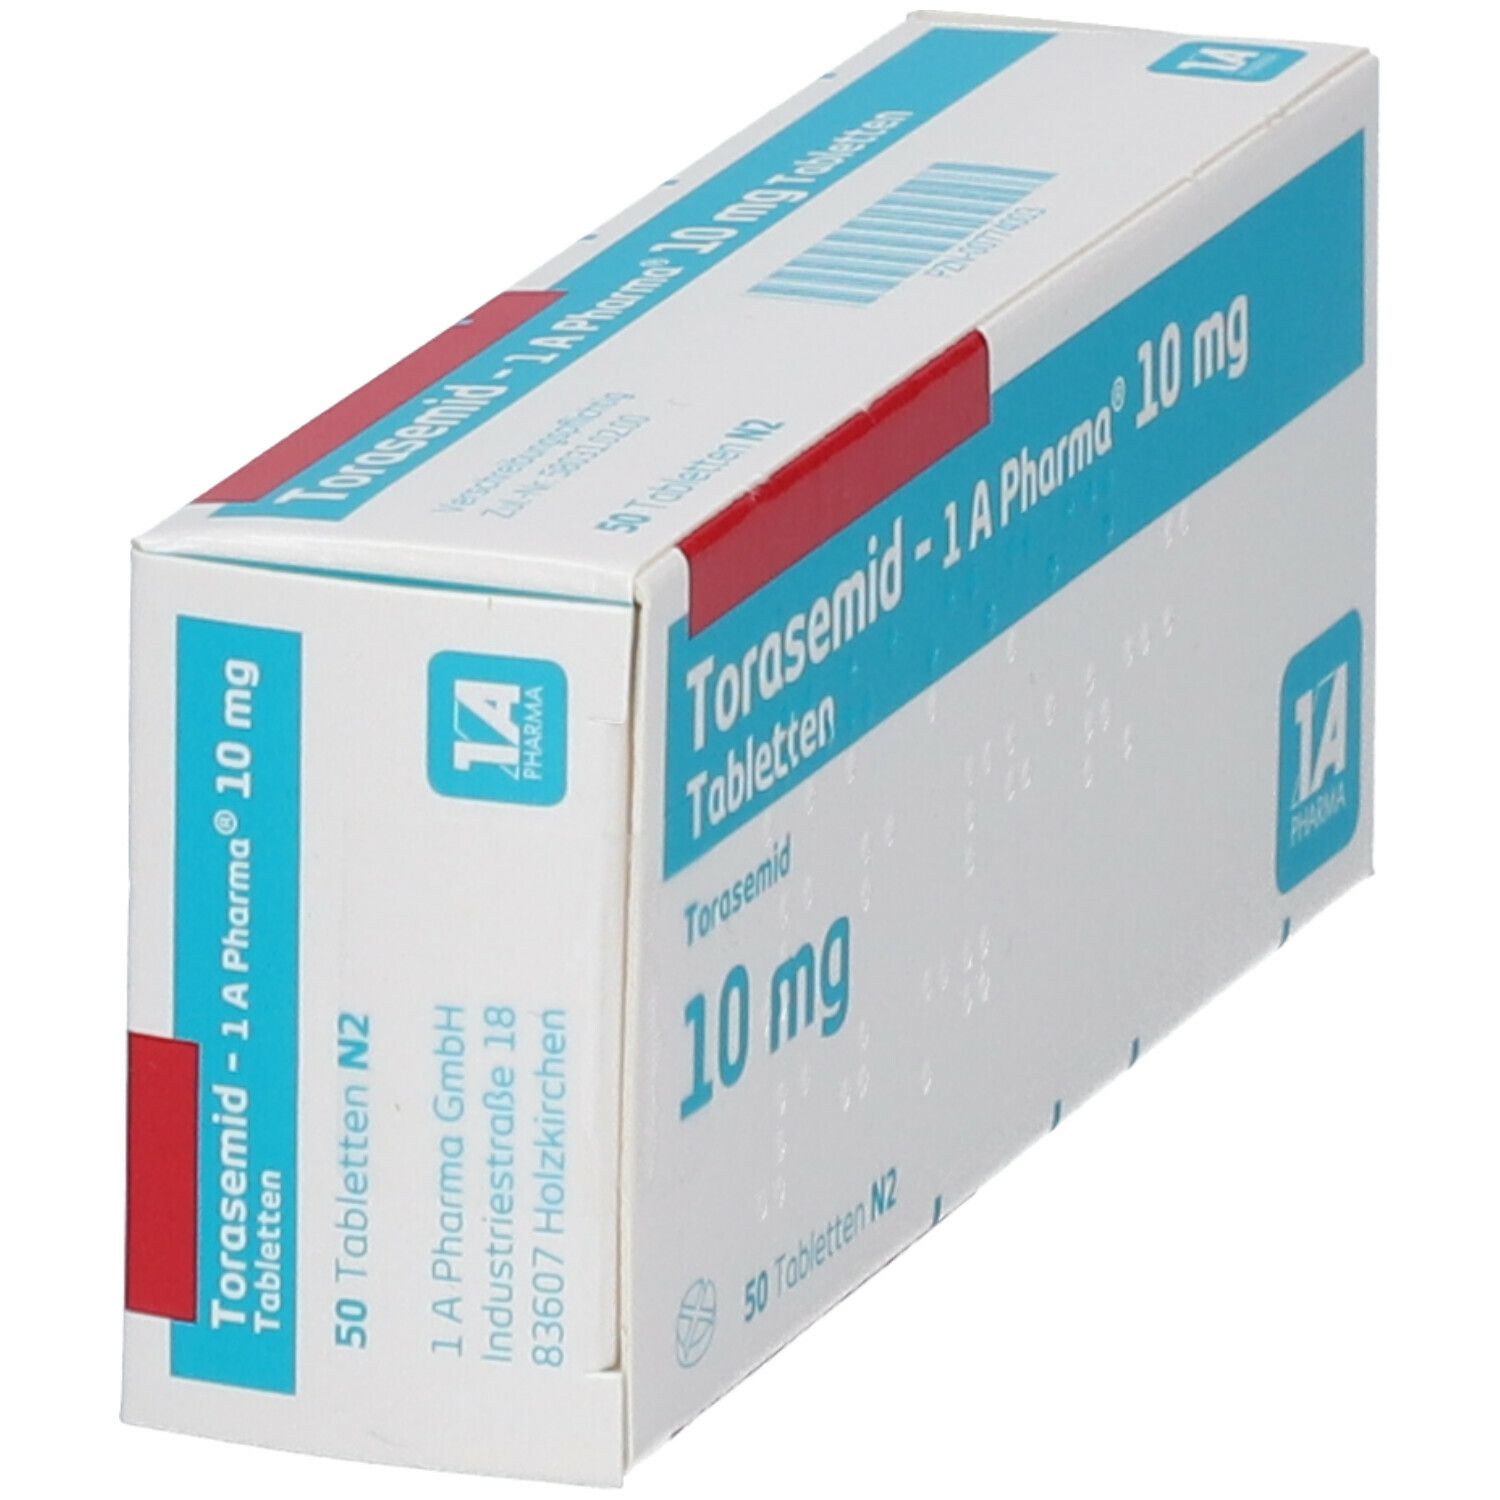 Torasemid 1A Pharma® 10 Mg